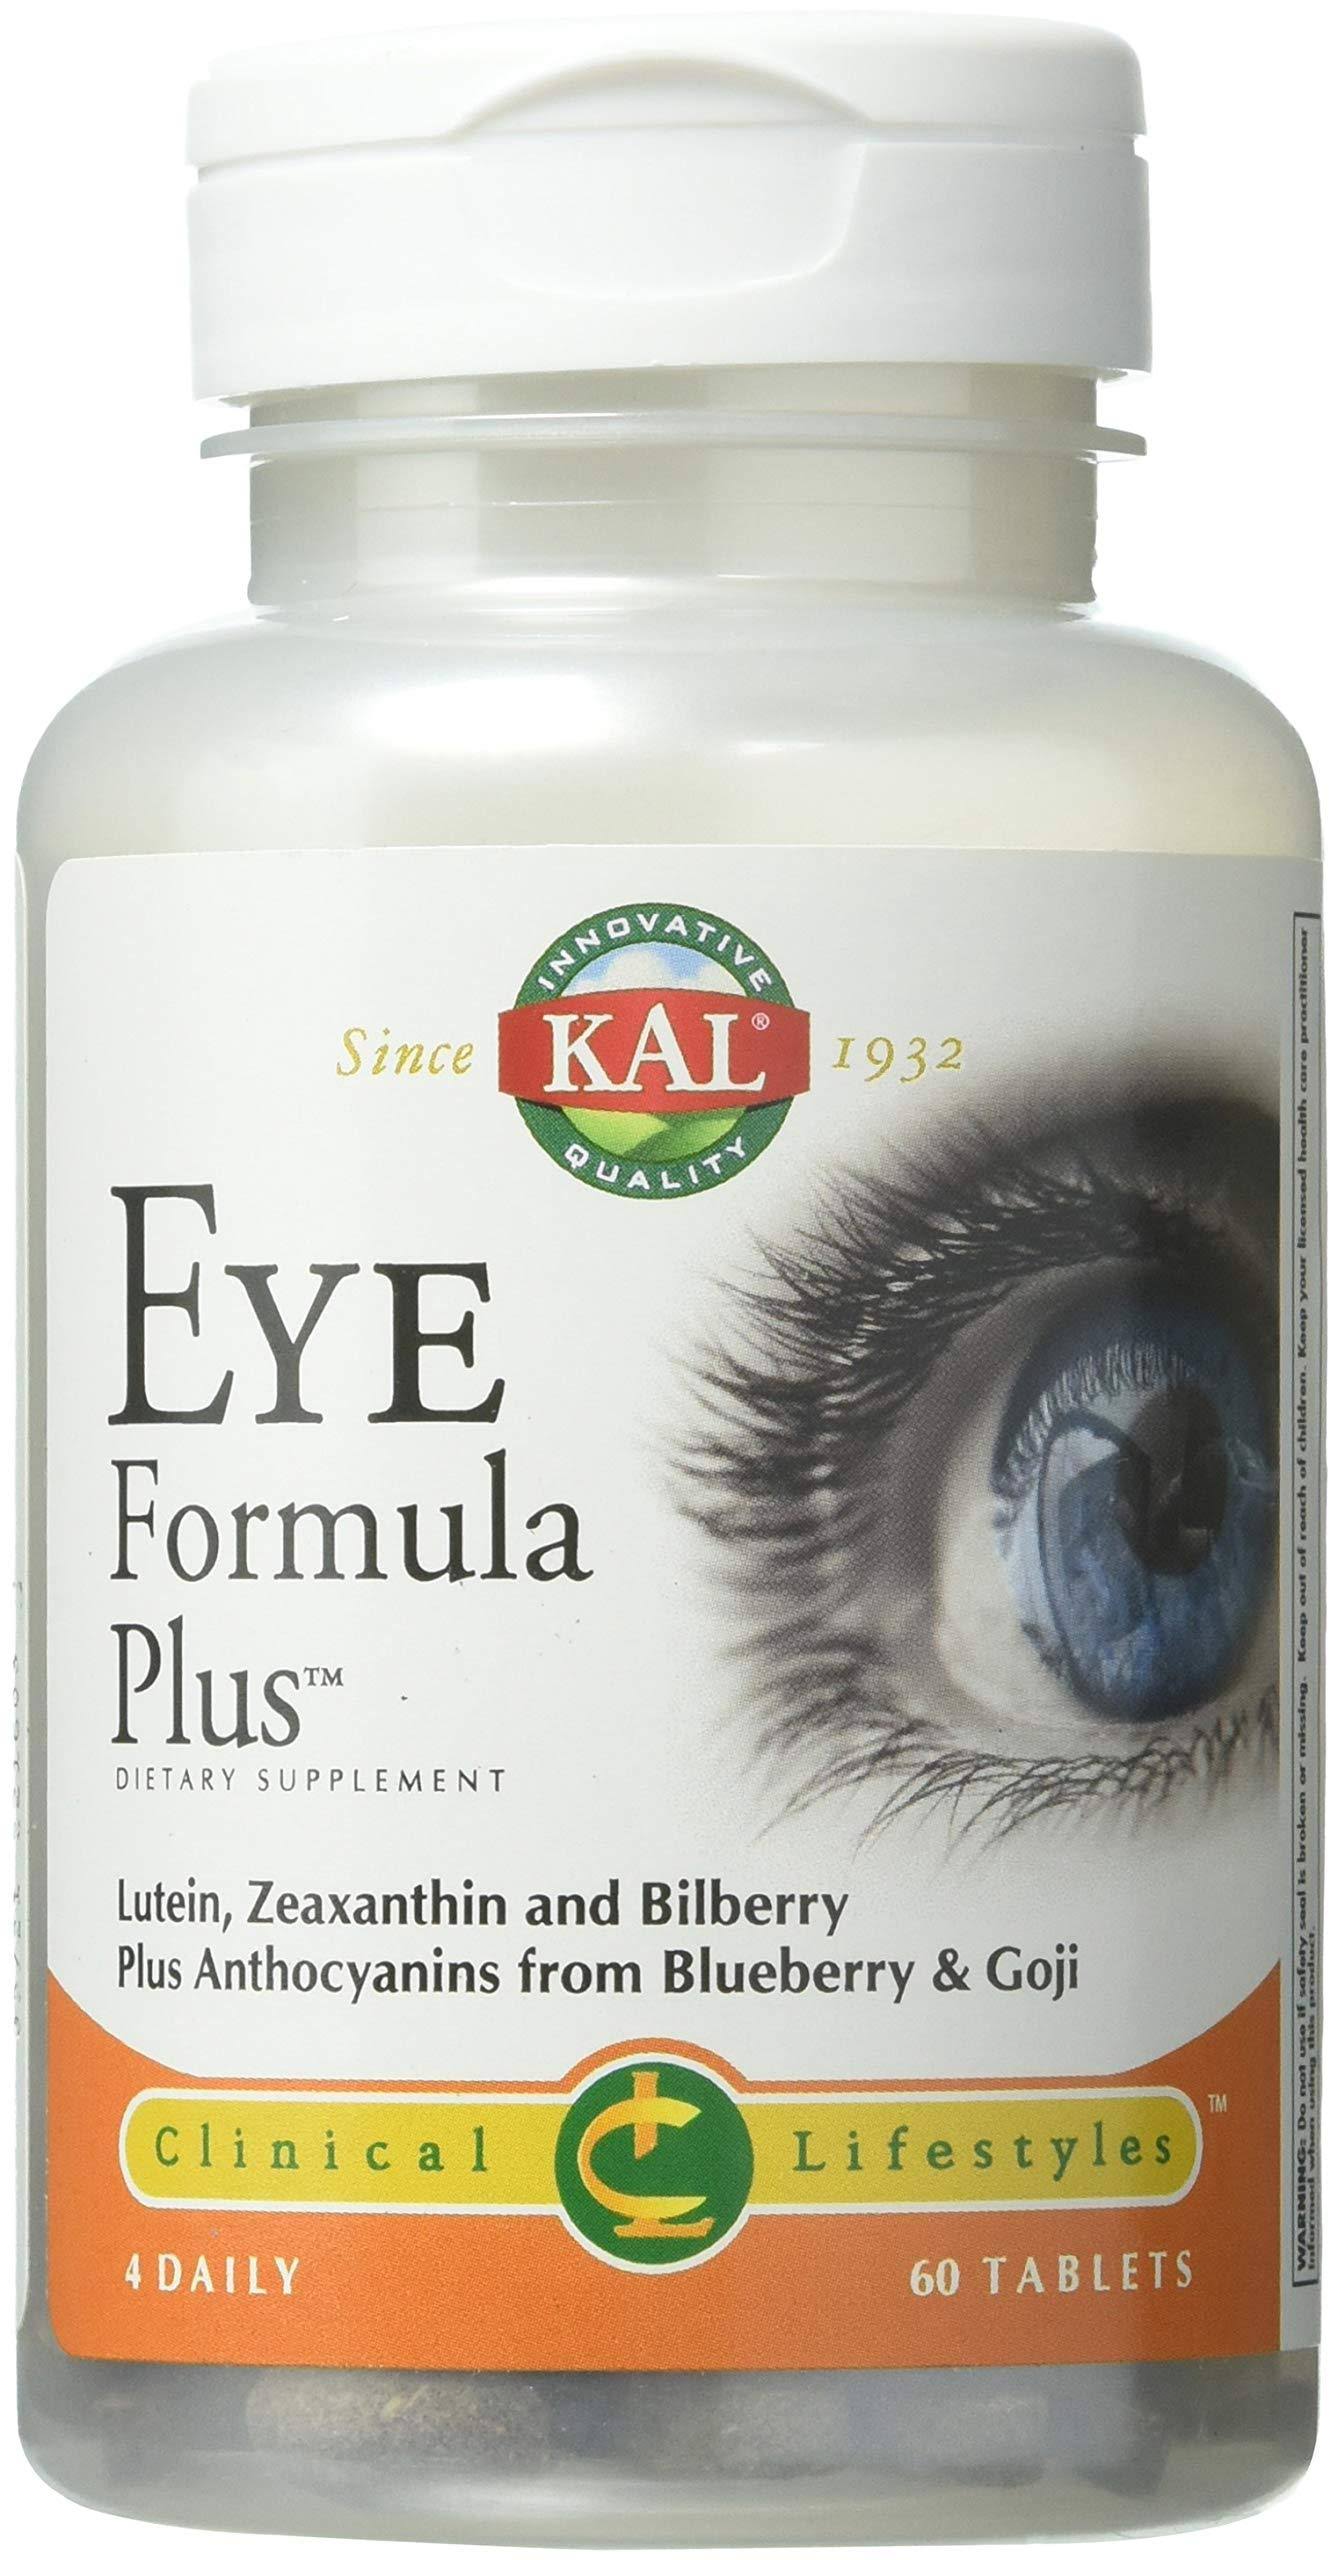 KAL Eye Formula Plus Dietary Supplement Tablets - 60ct